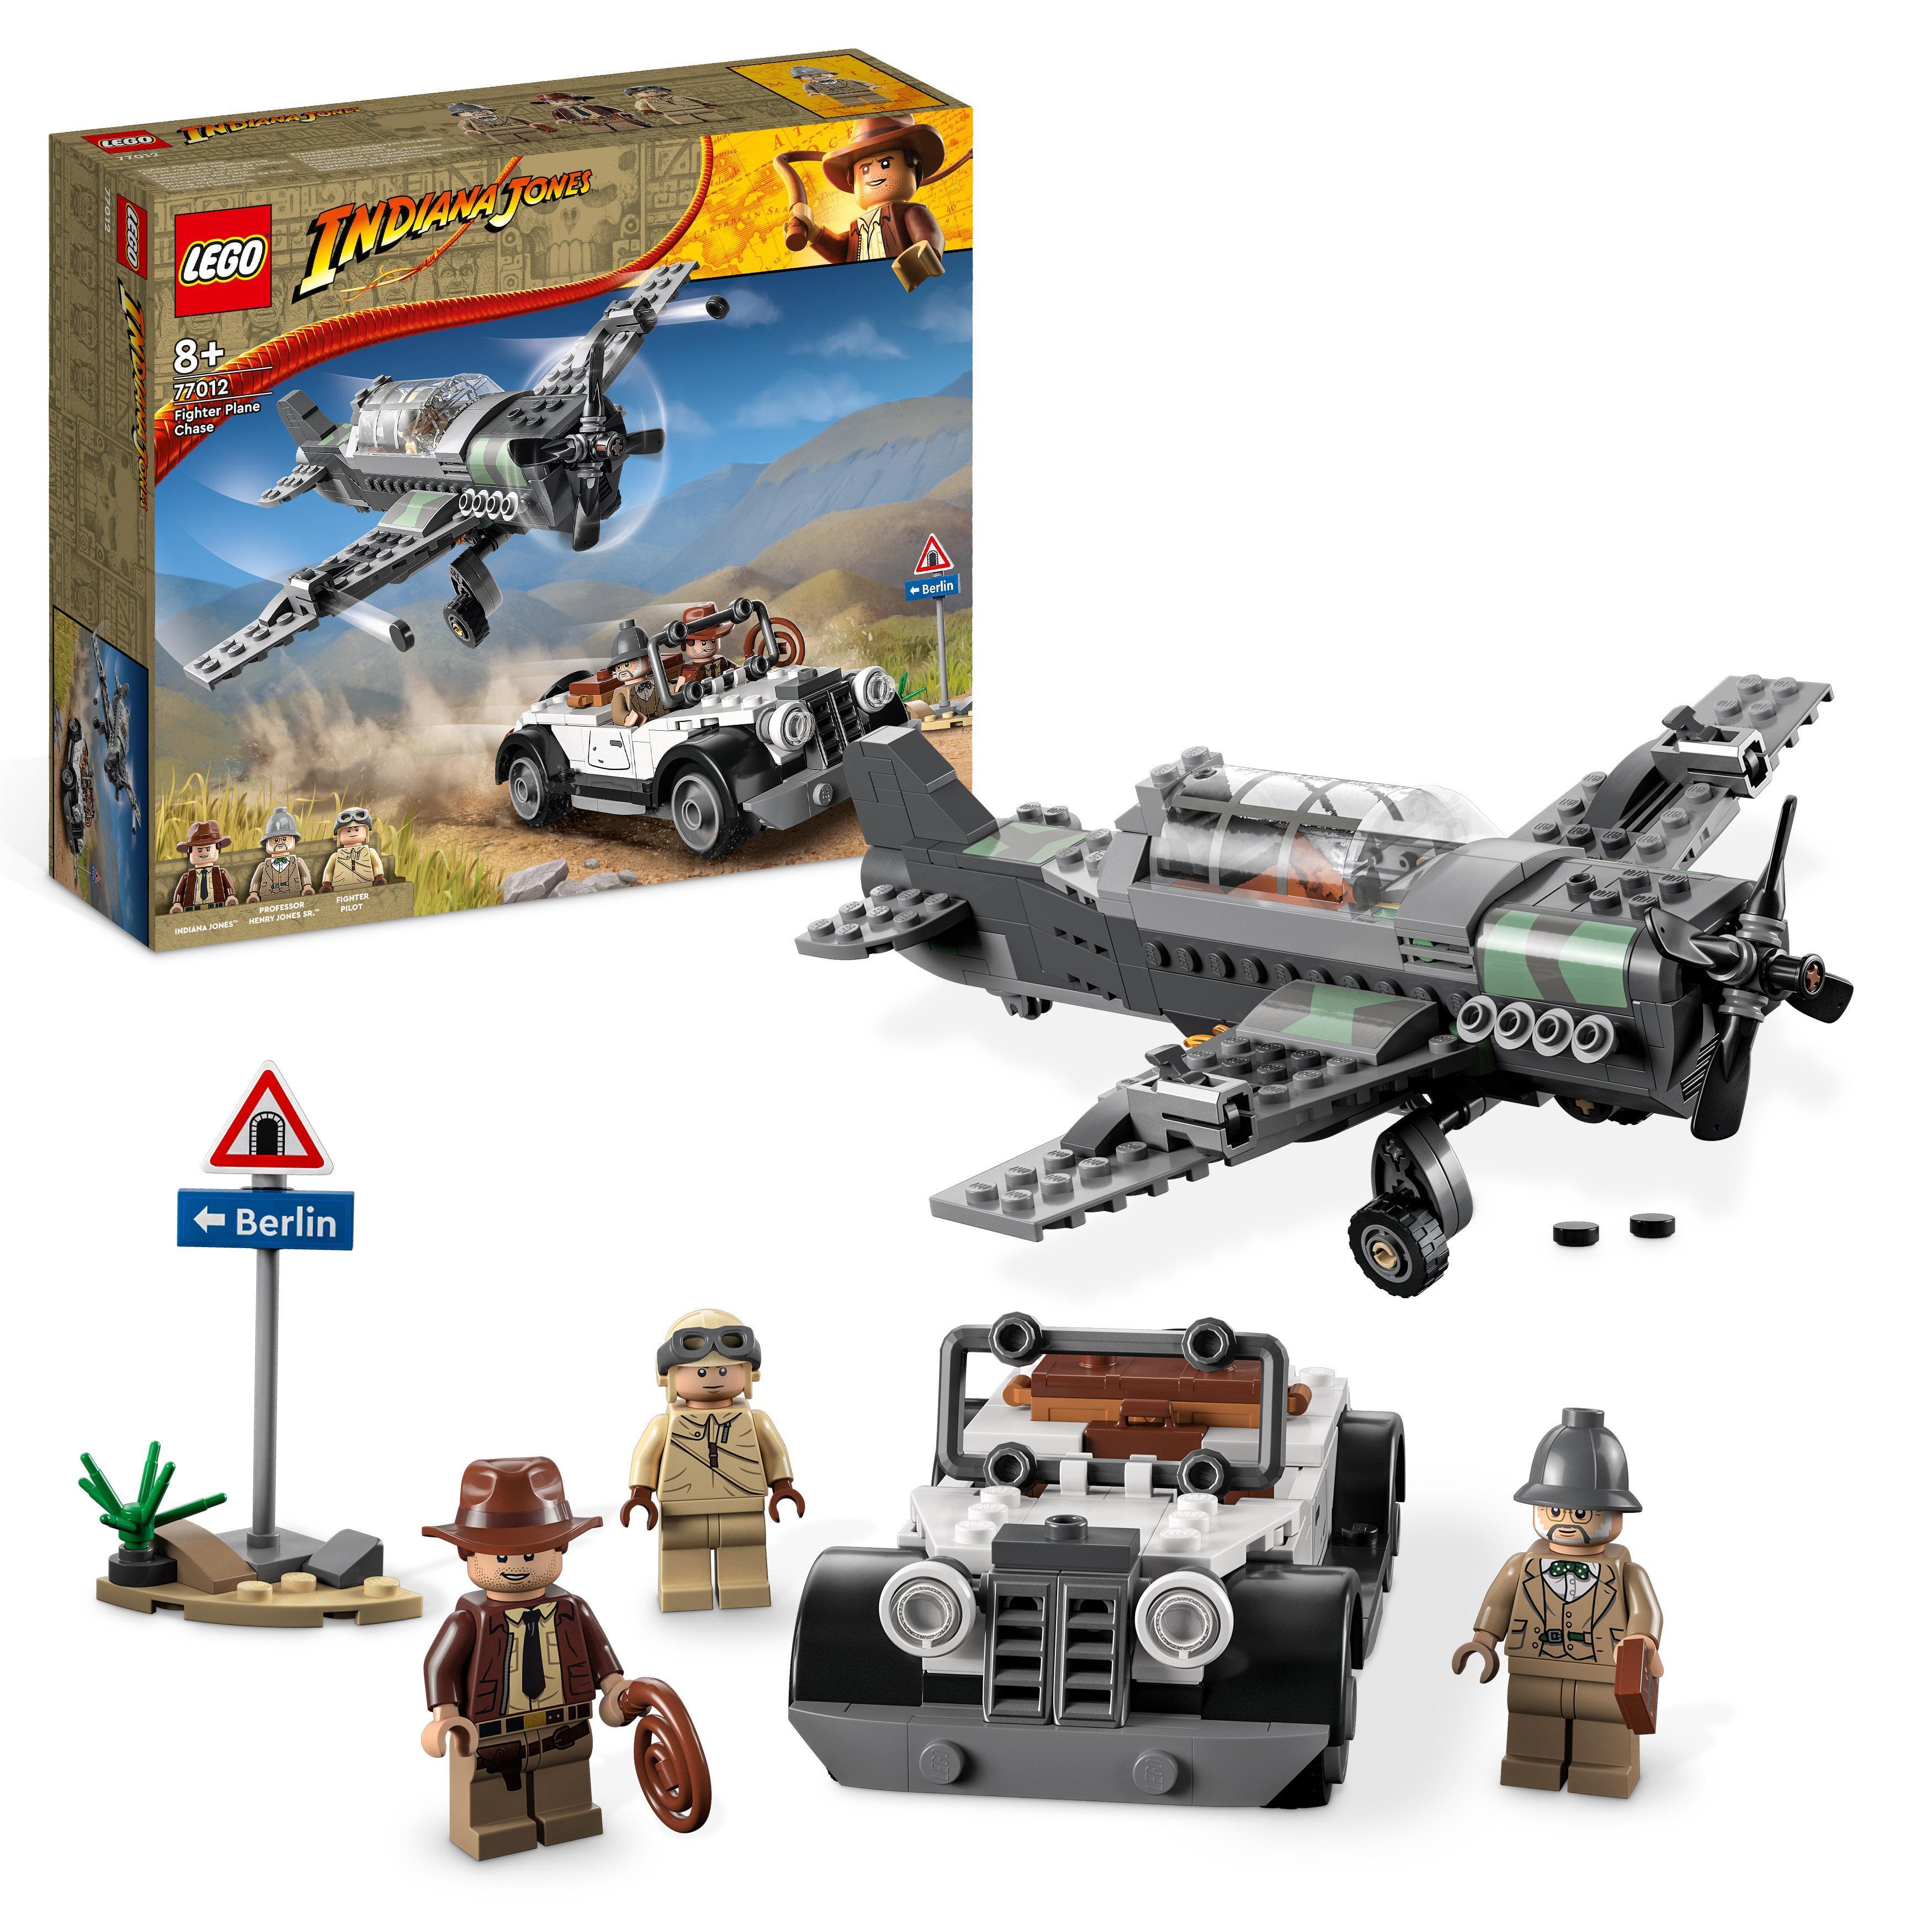 LEGO Indiana Jones - Jagerfly-oppdrag (77012)